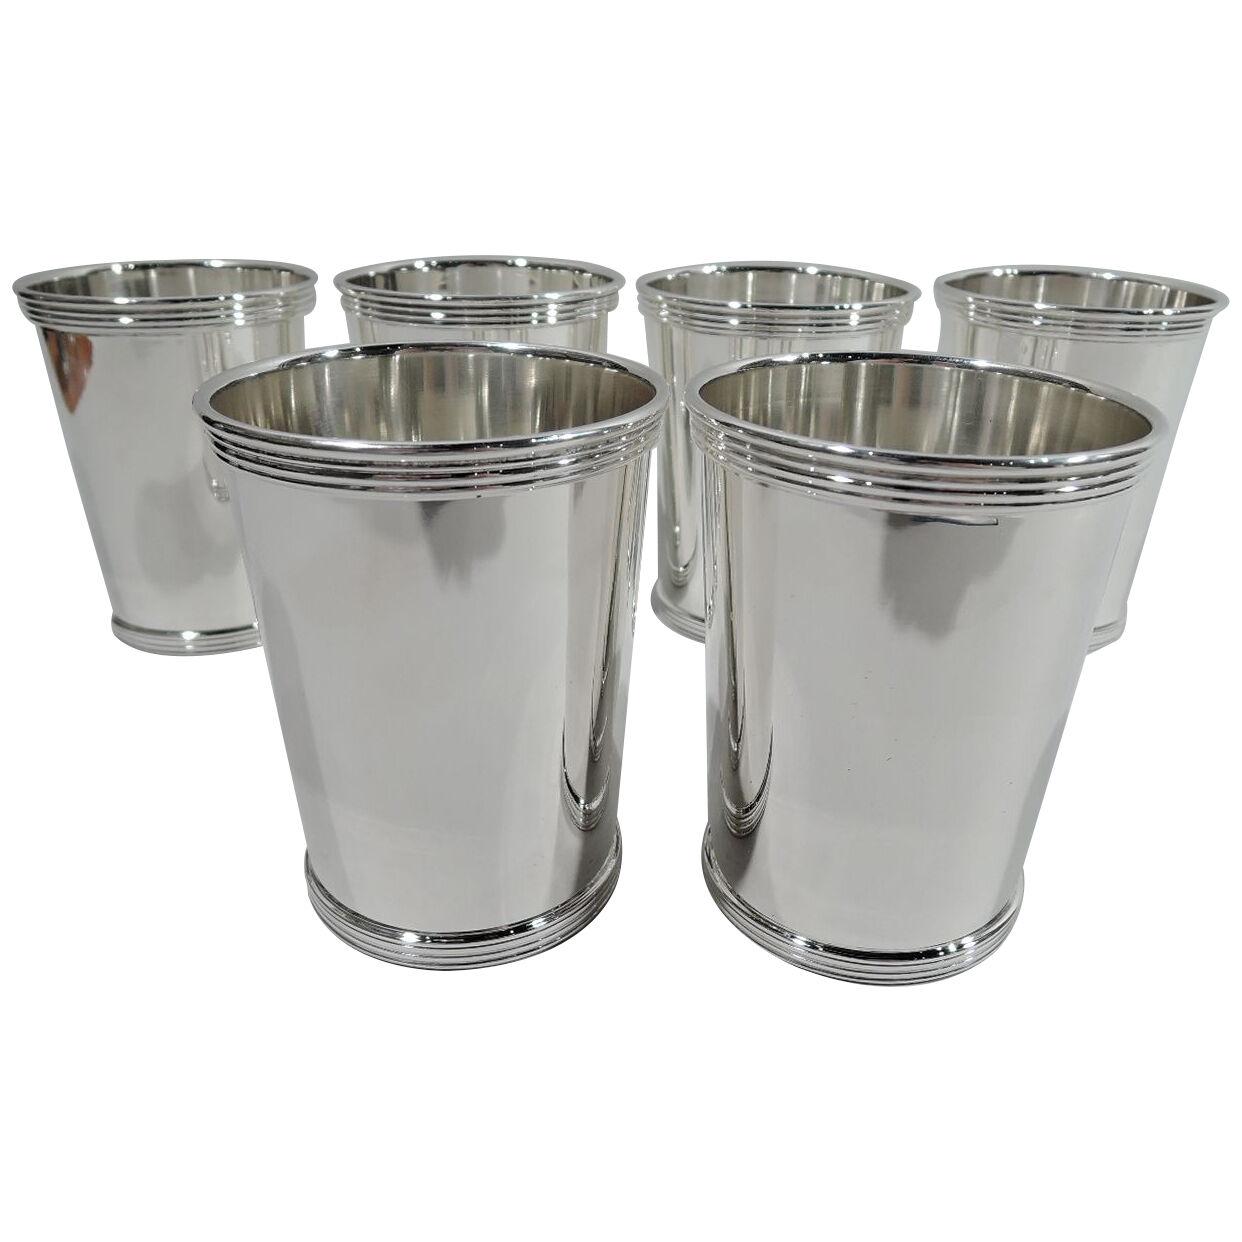 Set of 6 International Sterling Silver Mint Julep Cups